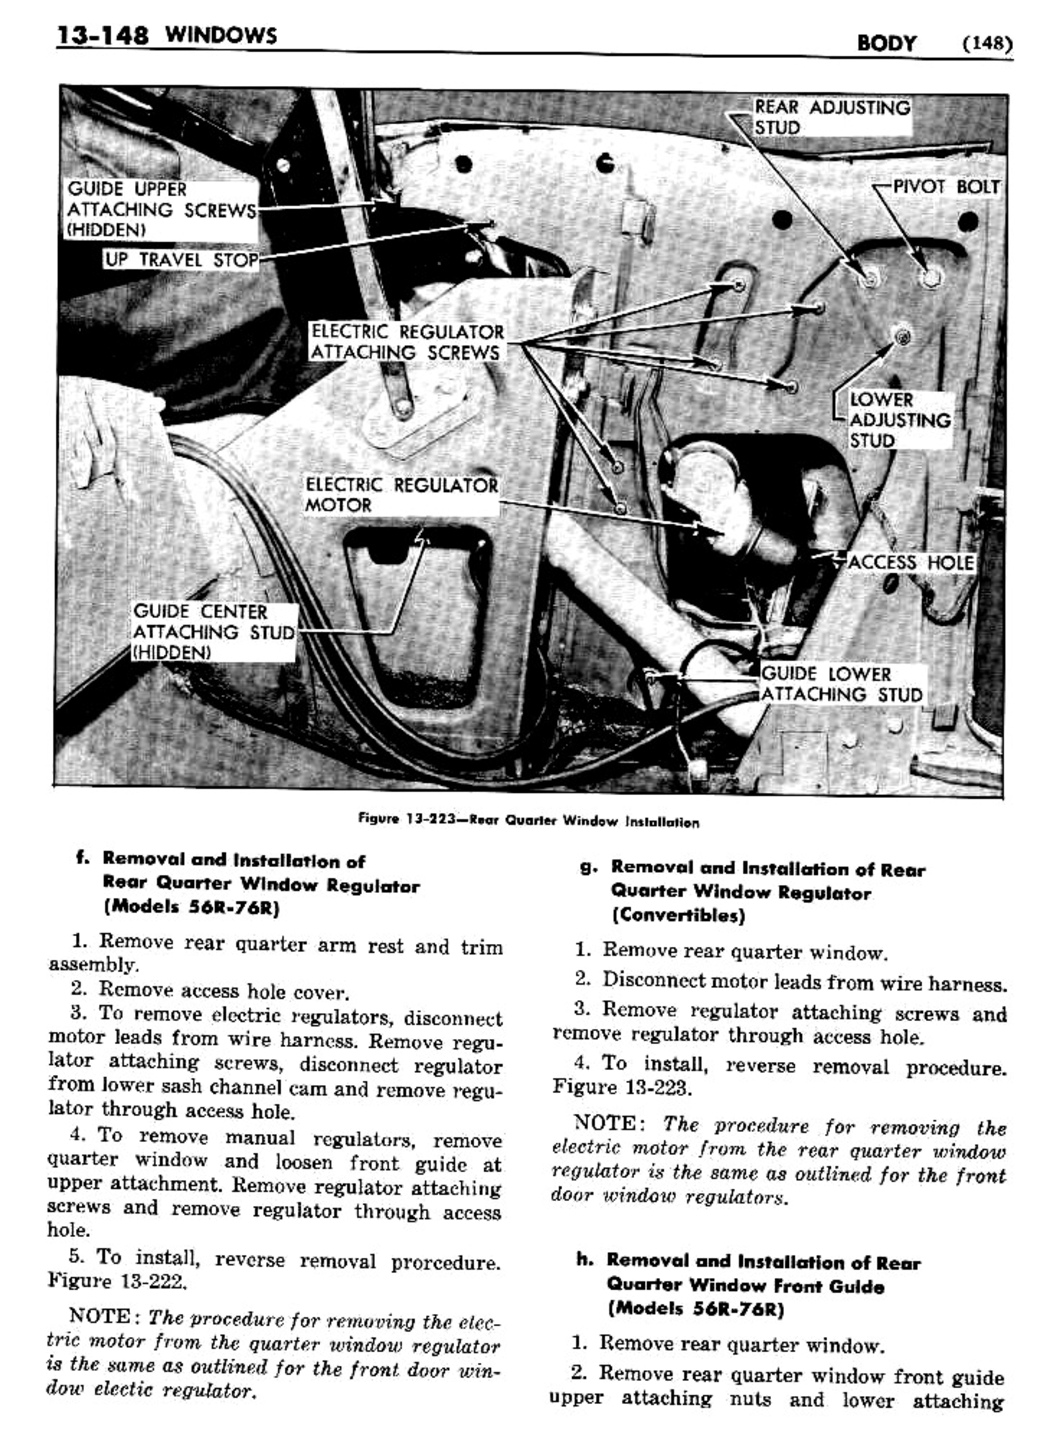 n_1957 Buick Body Service Manual-150-150.jpg